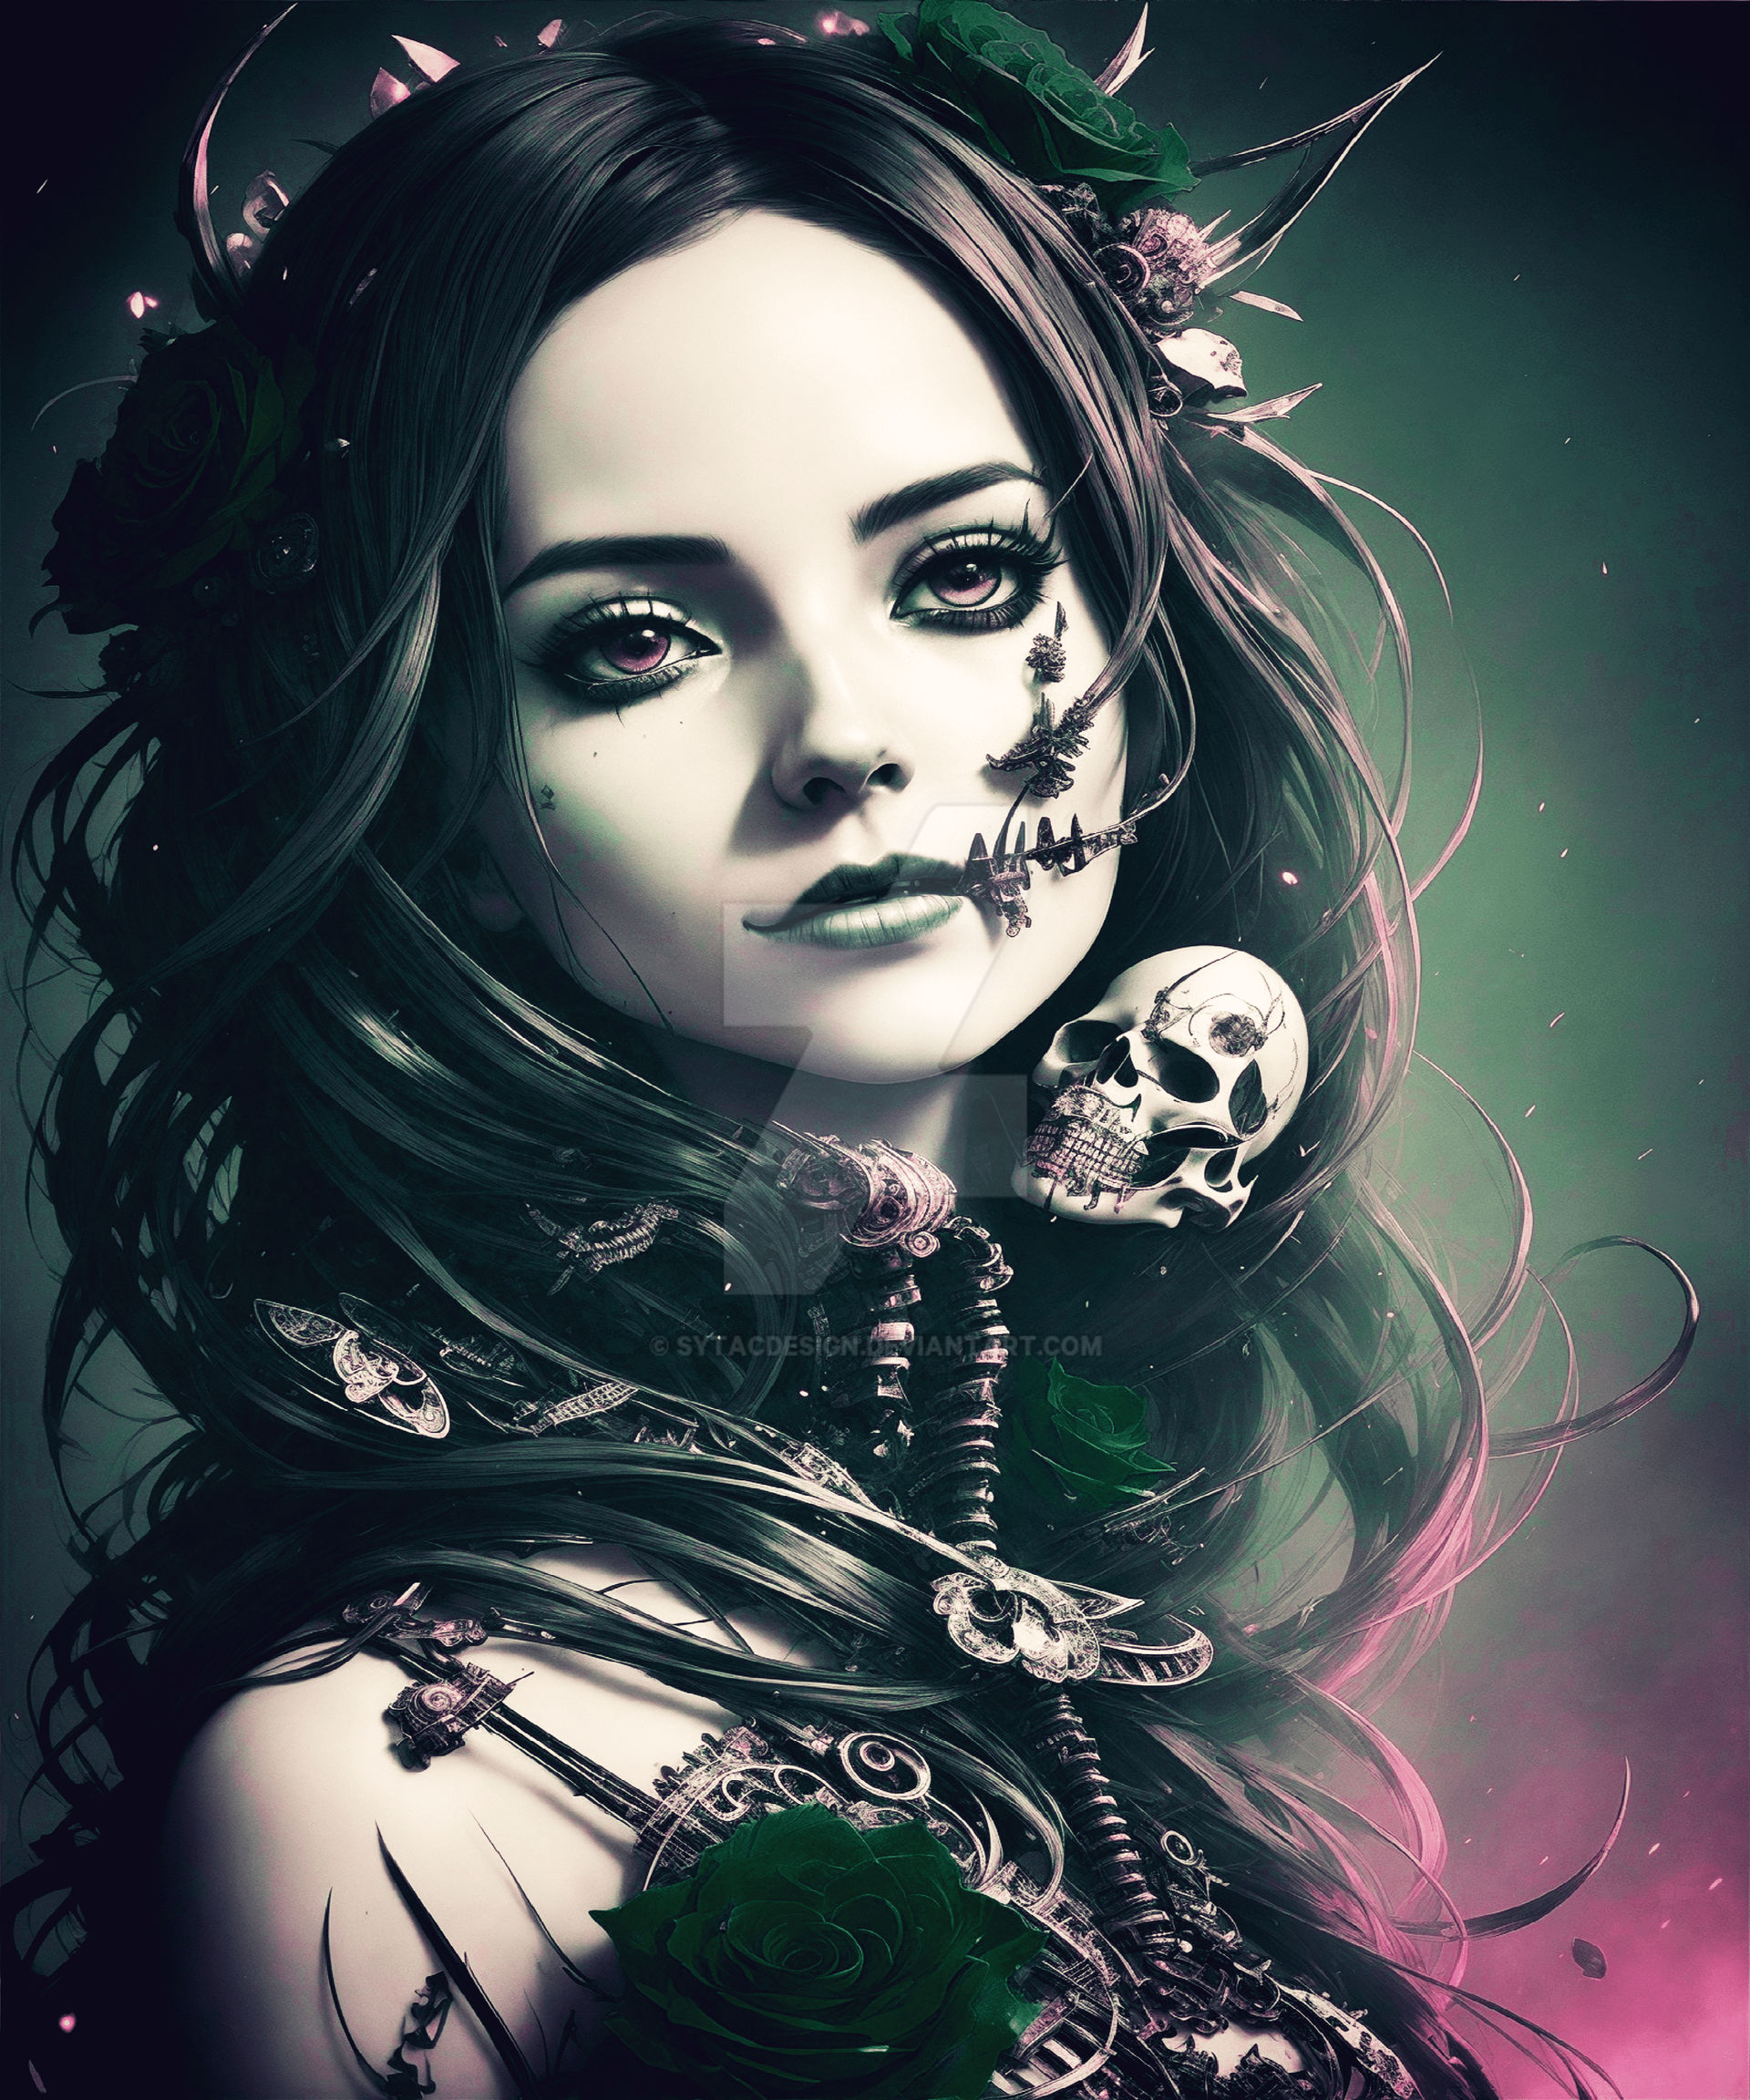 Dark Woman woman Bones Gothic Roses Skulls captiva by sytacdesign